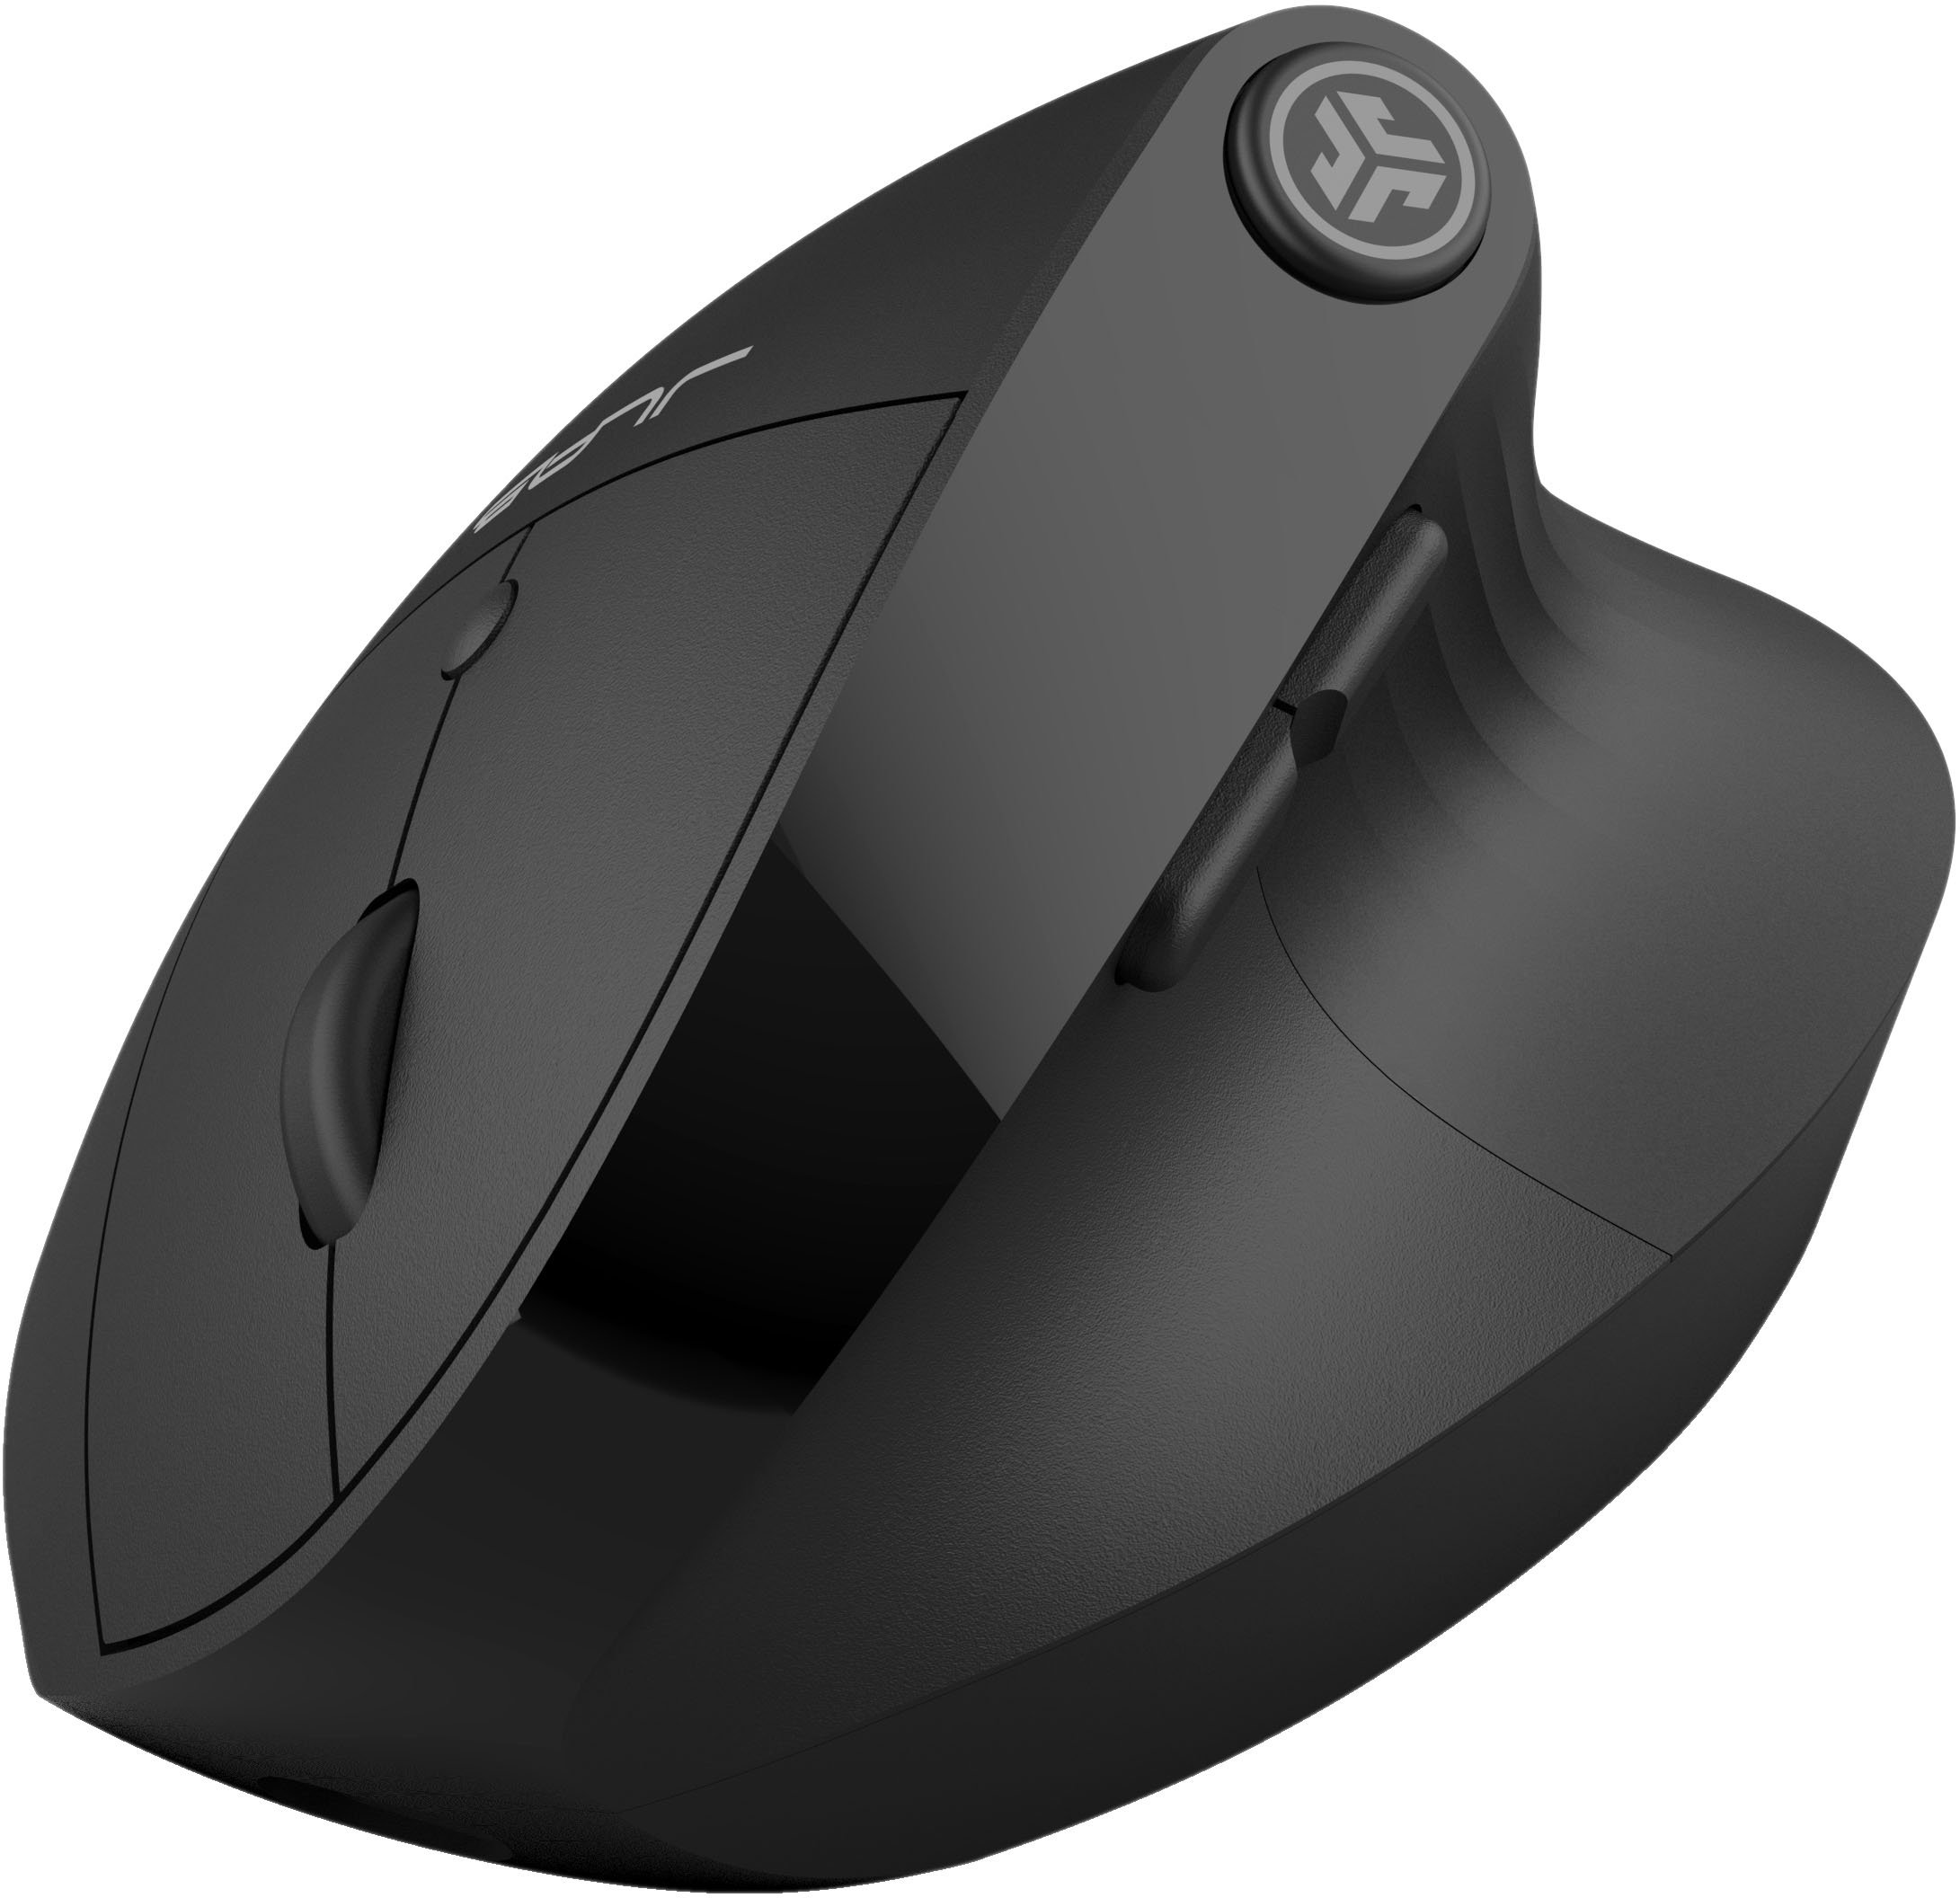 Angle View: JLab - JBuds Ergonomic Wireless Mouse - Black